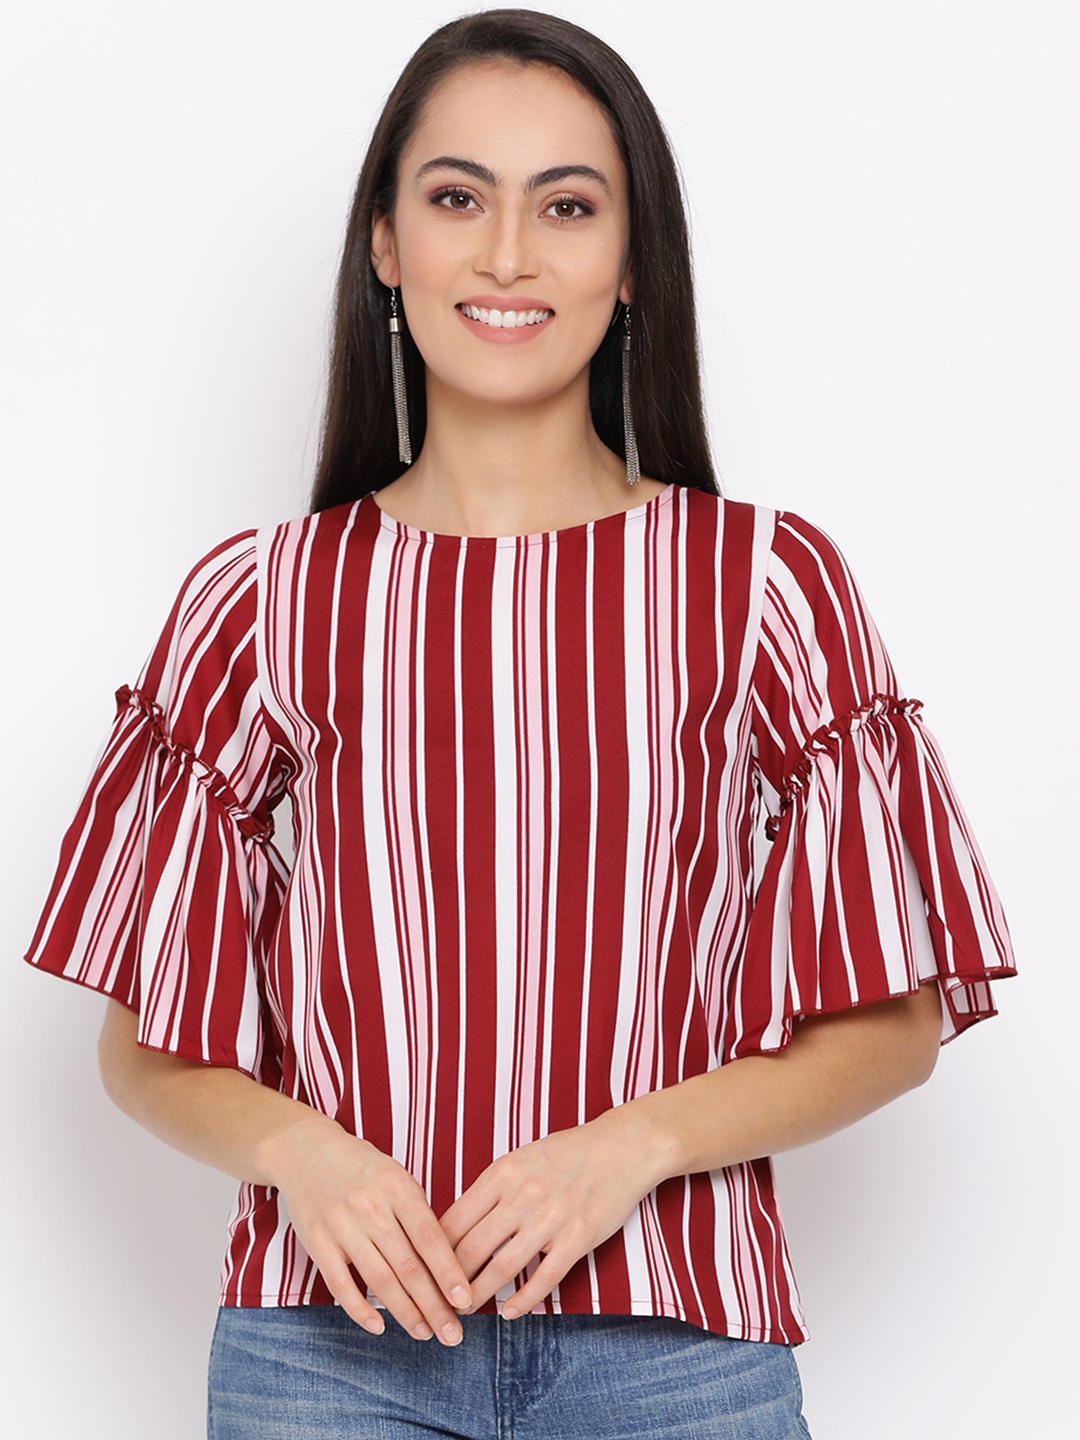 DRAAX fashions | Draax Fashions Women Red Striped Top